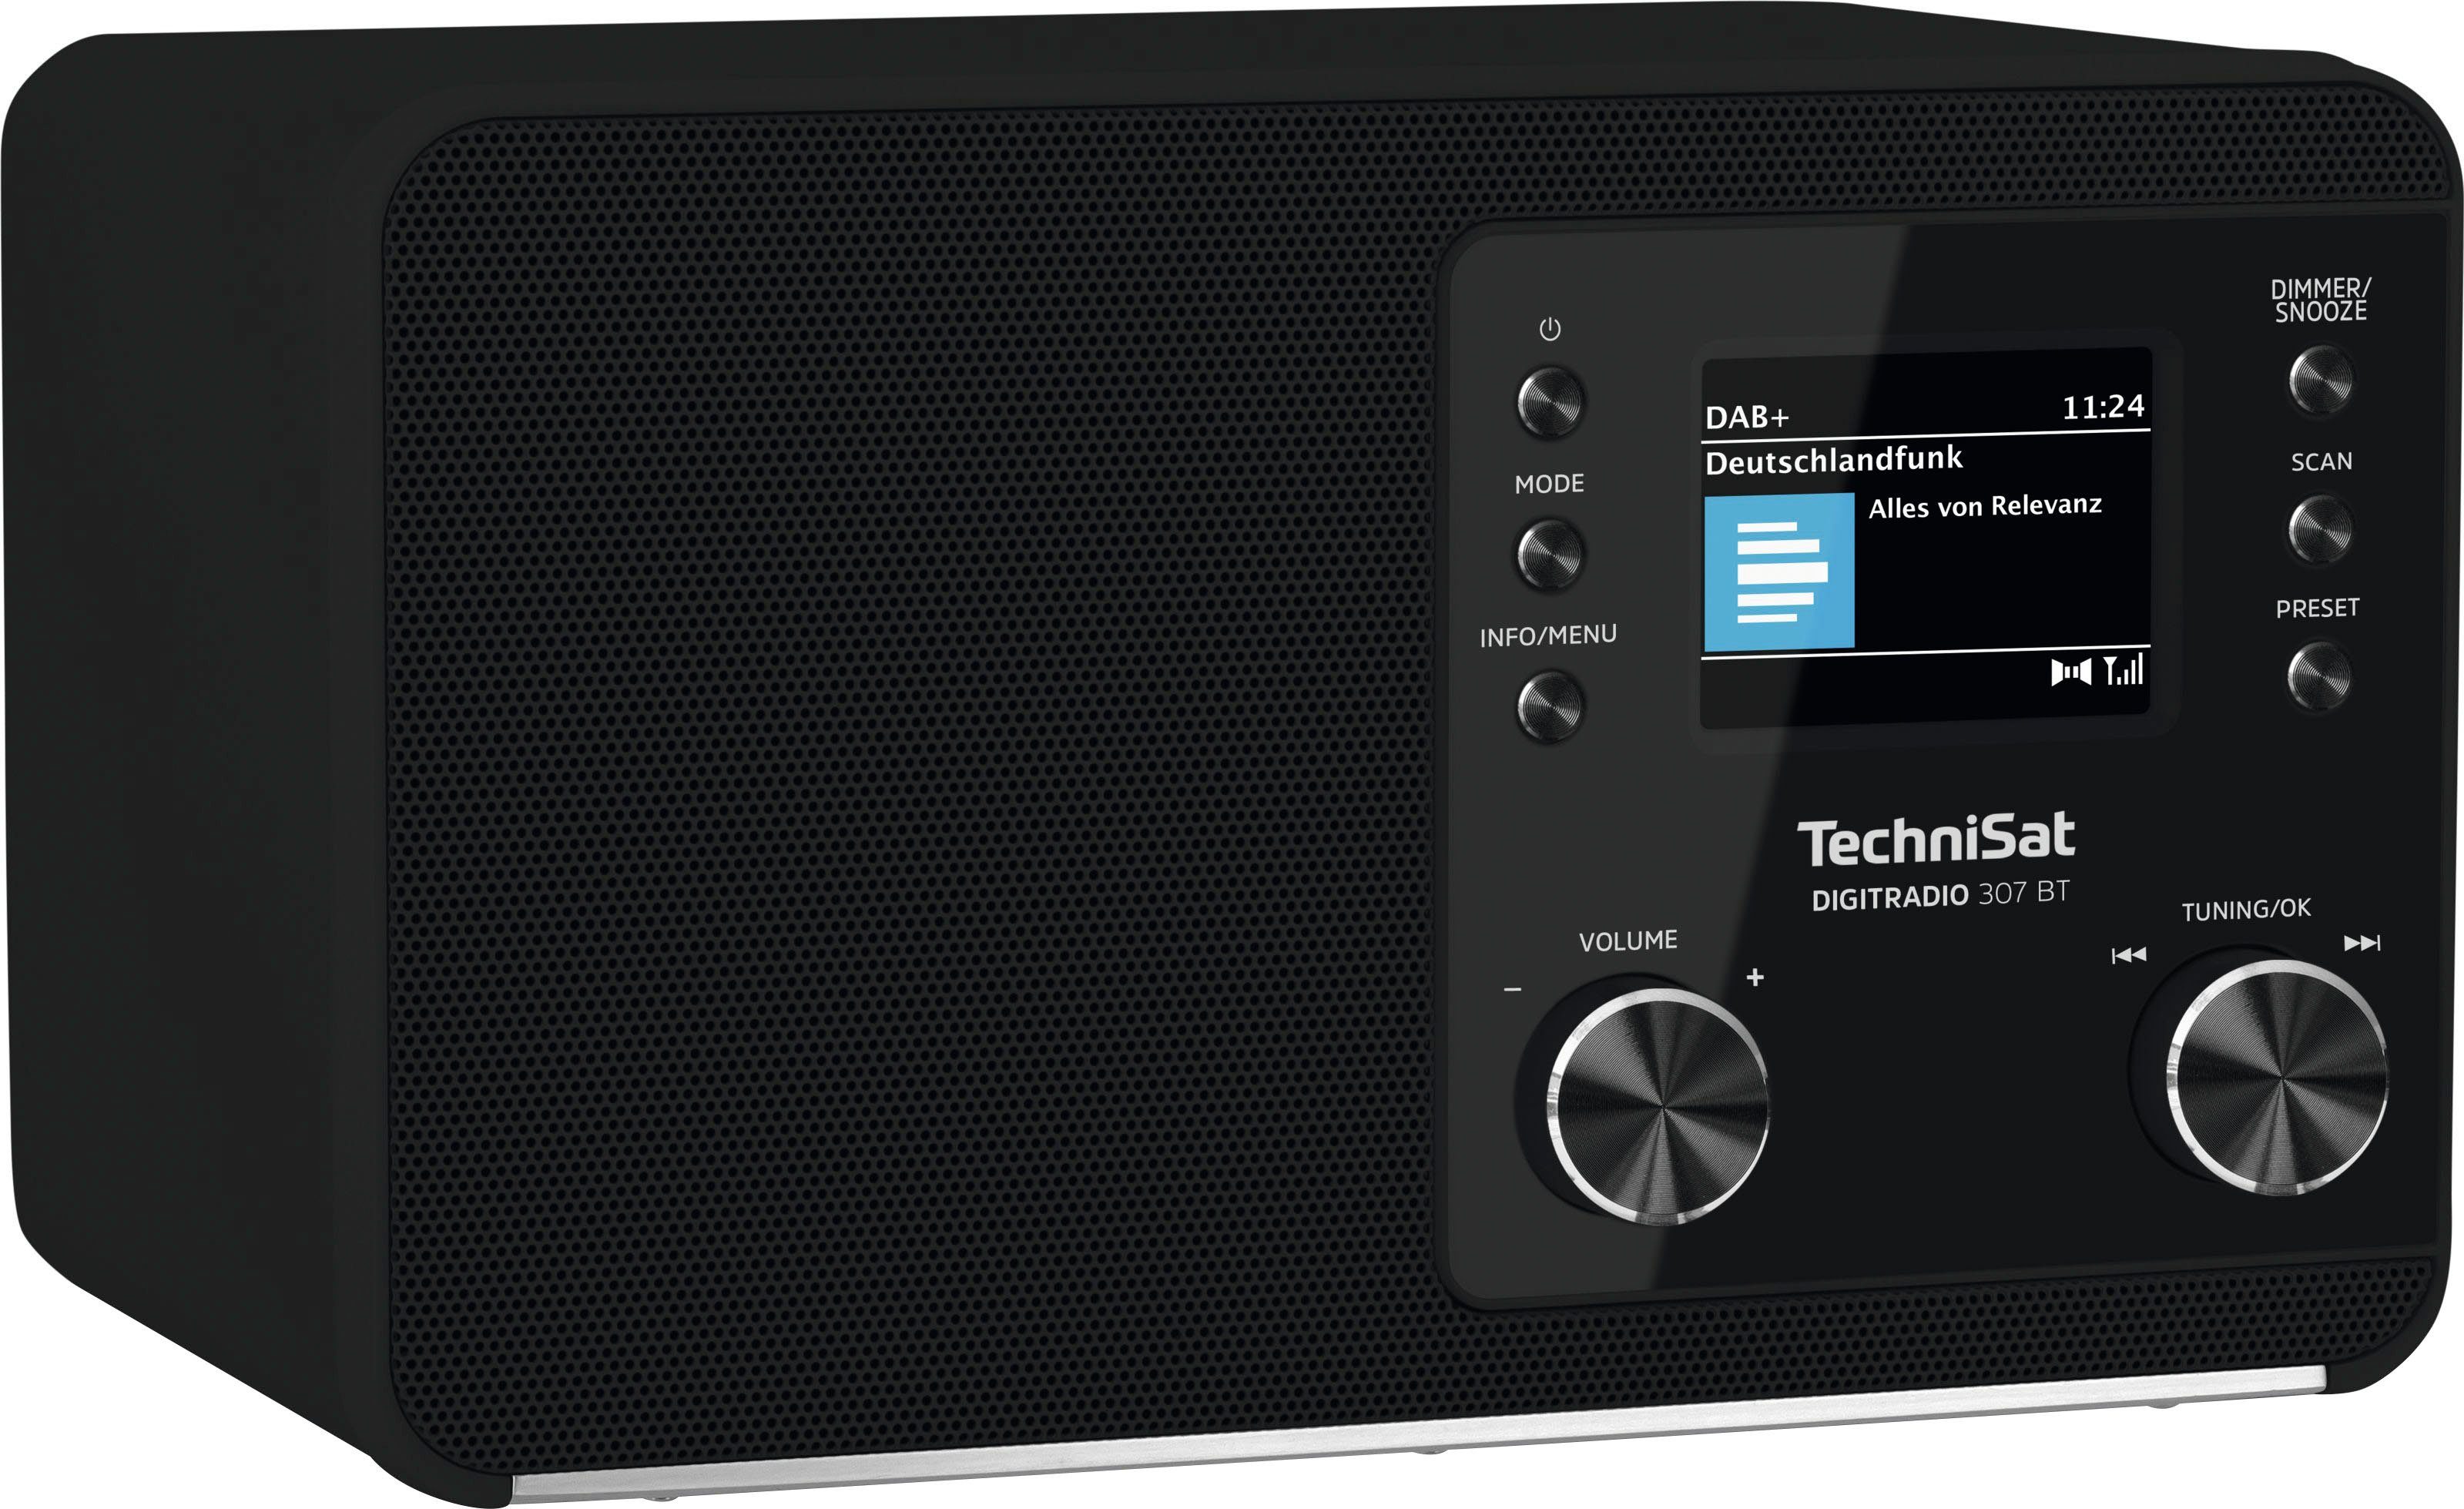 TechniSat DIGITRADIO 307 BT Radio (Digitalradio (DAB), UKW mit RDS, 5 W) schwarz